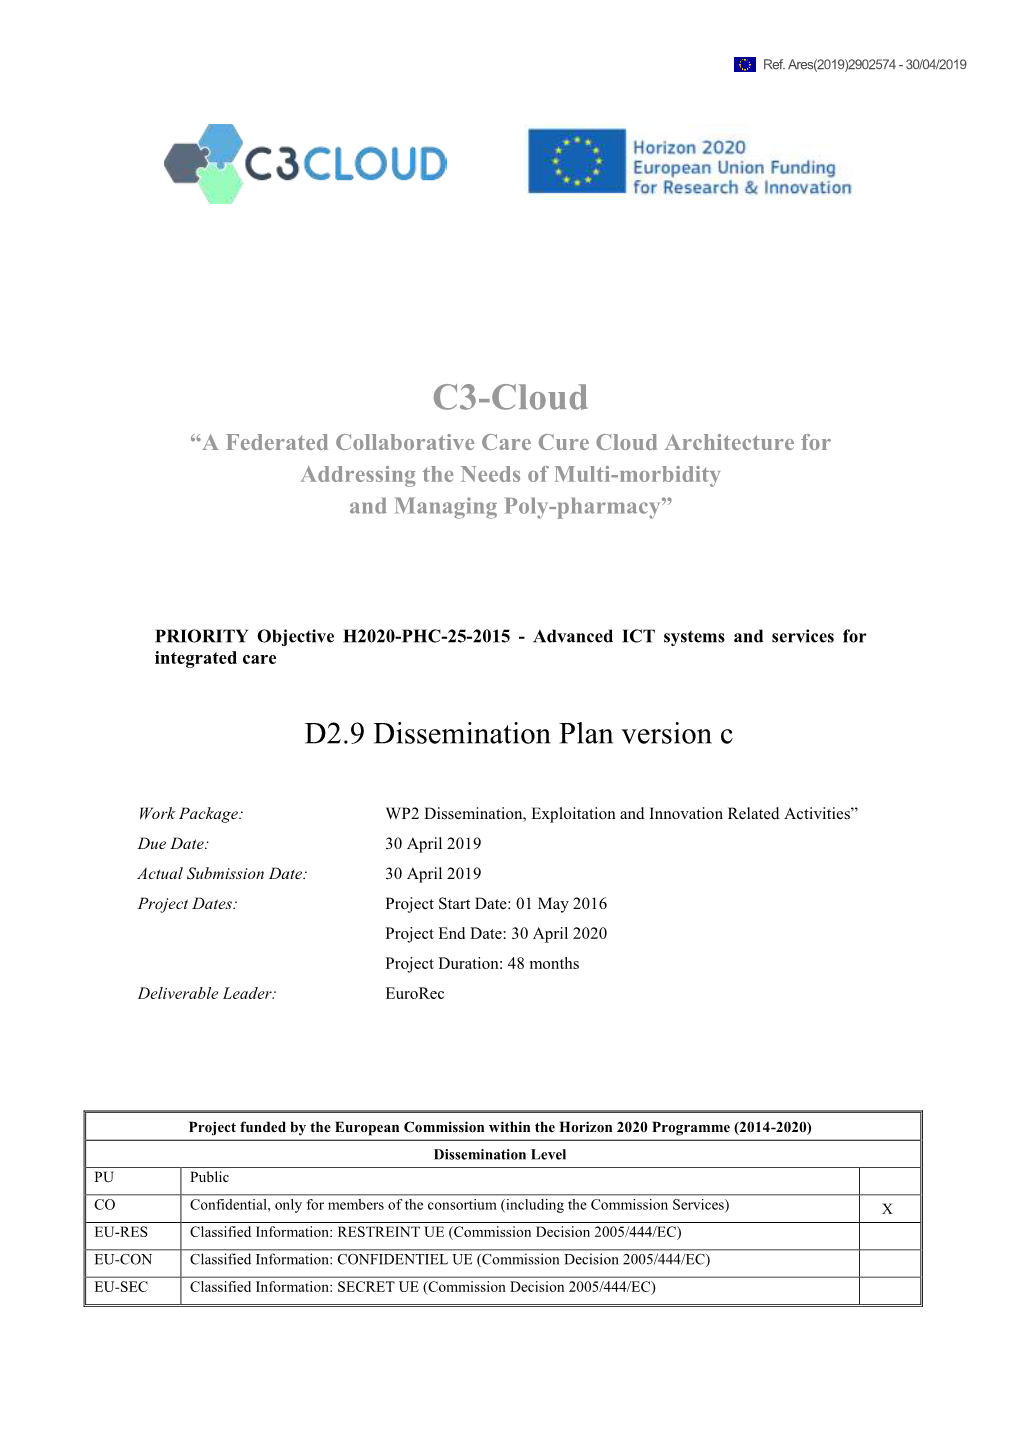 D2.9 Dissemination Plan Version C